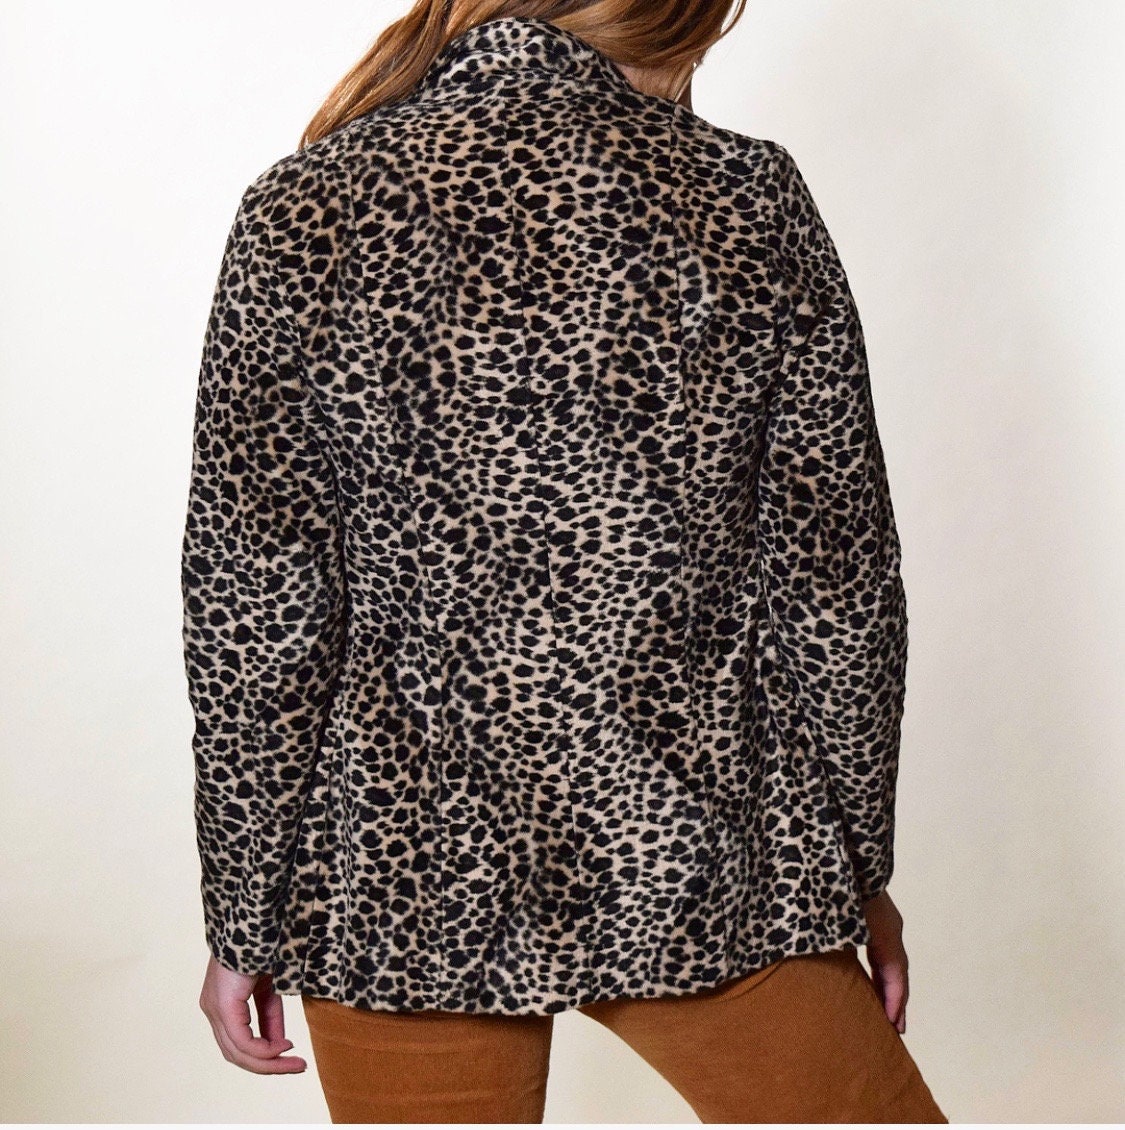 Vintage fitted leopard print button down blazer women's XS-S